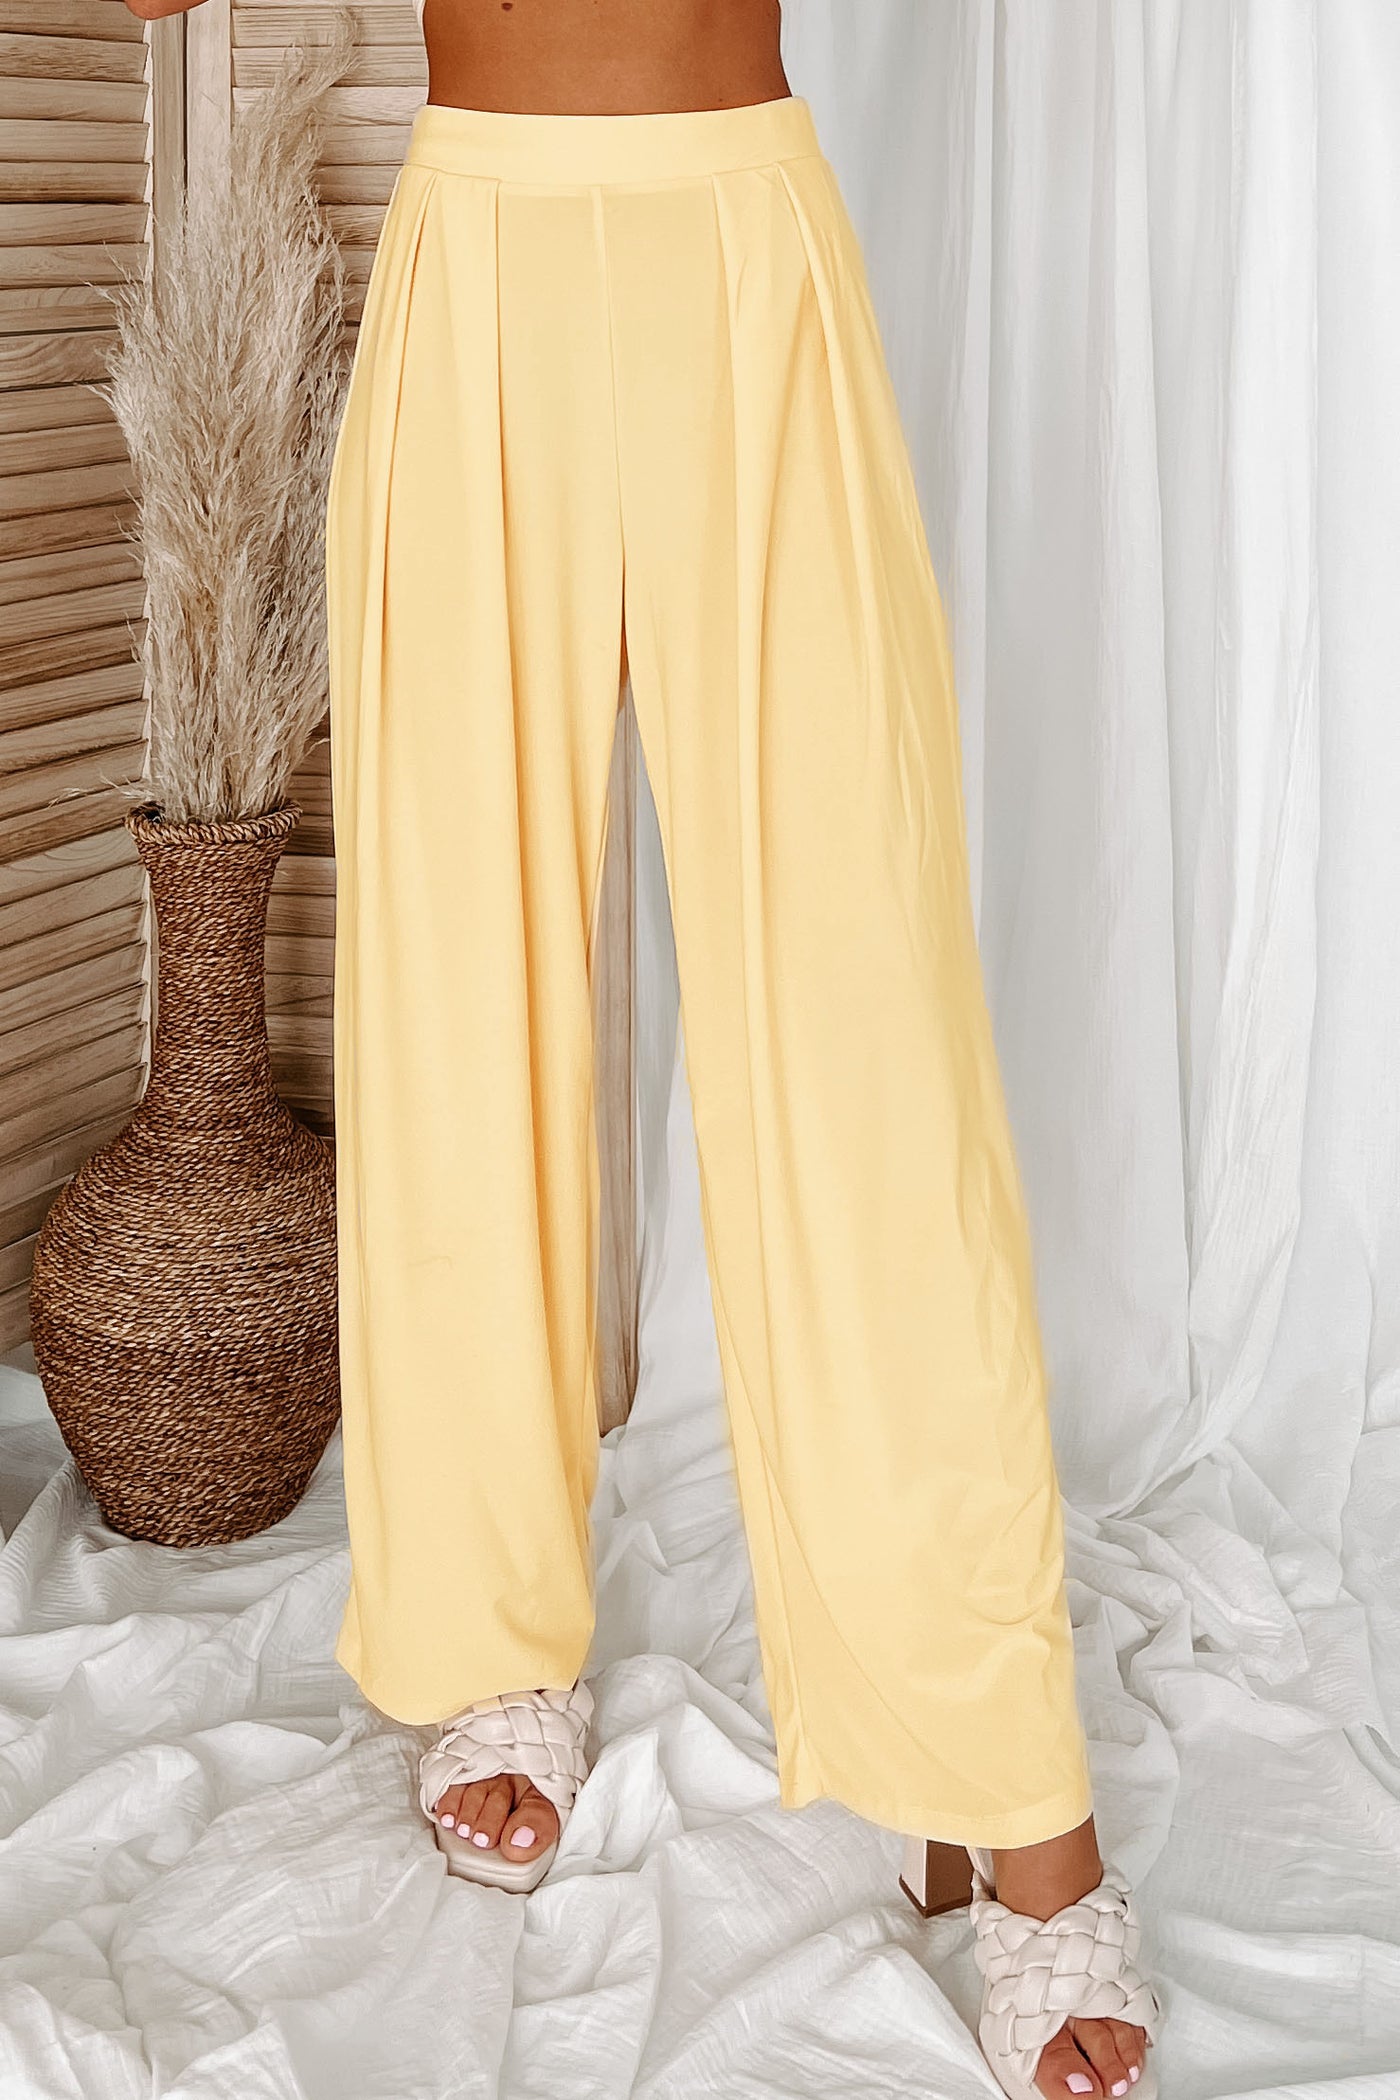 Vacation Mindset Strapless Tie Top & Pants Set (Pastel Yellow) - NanaMacs